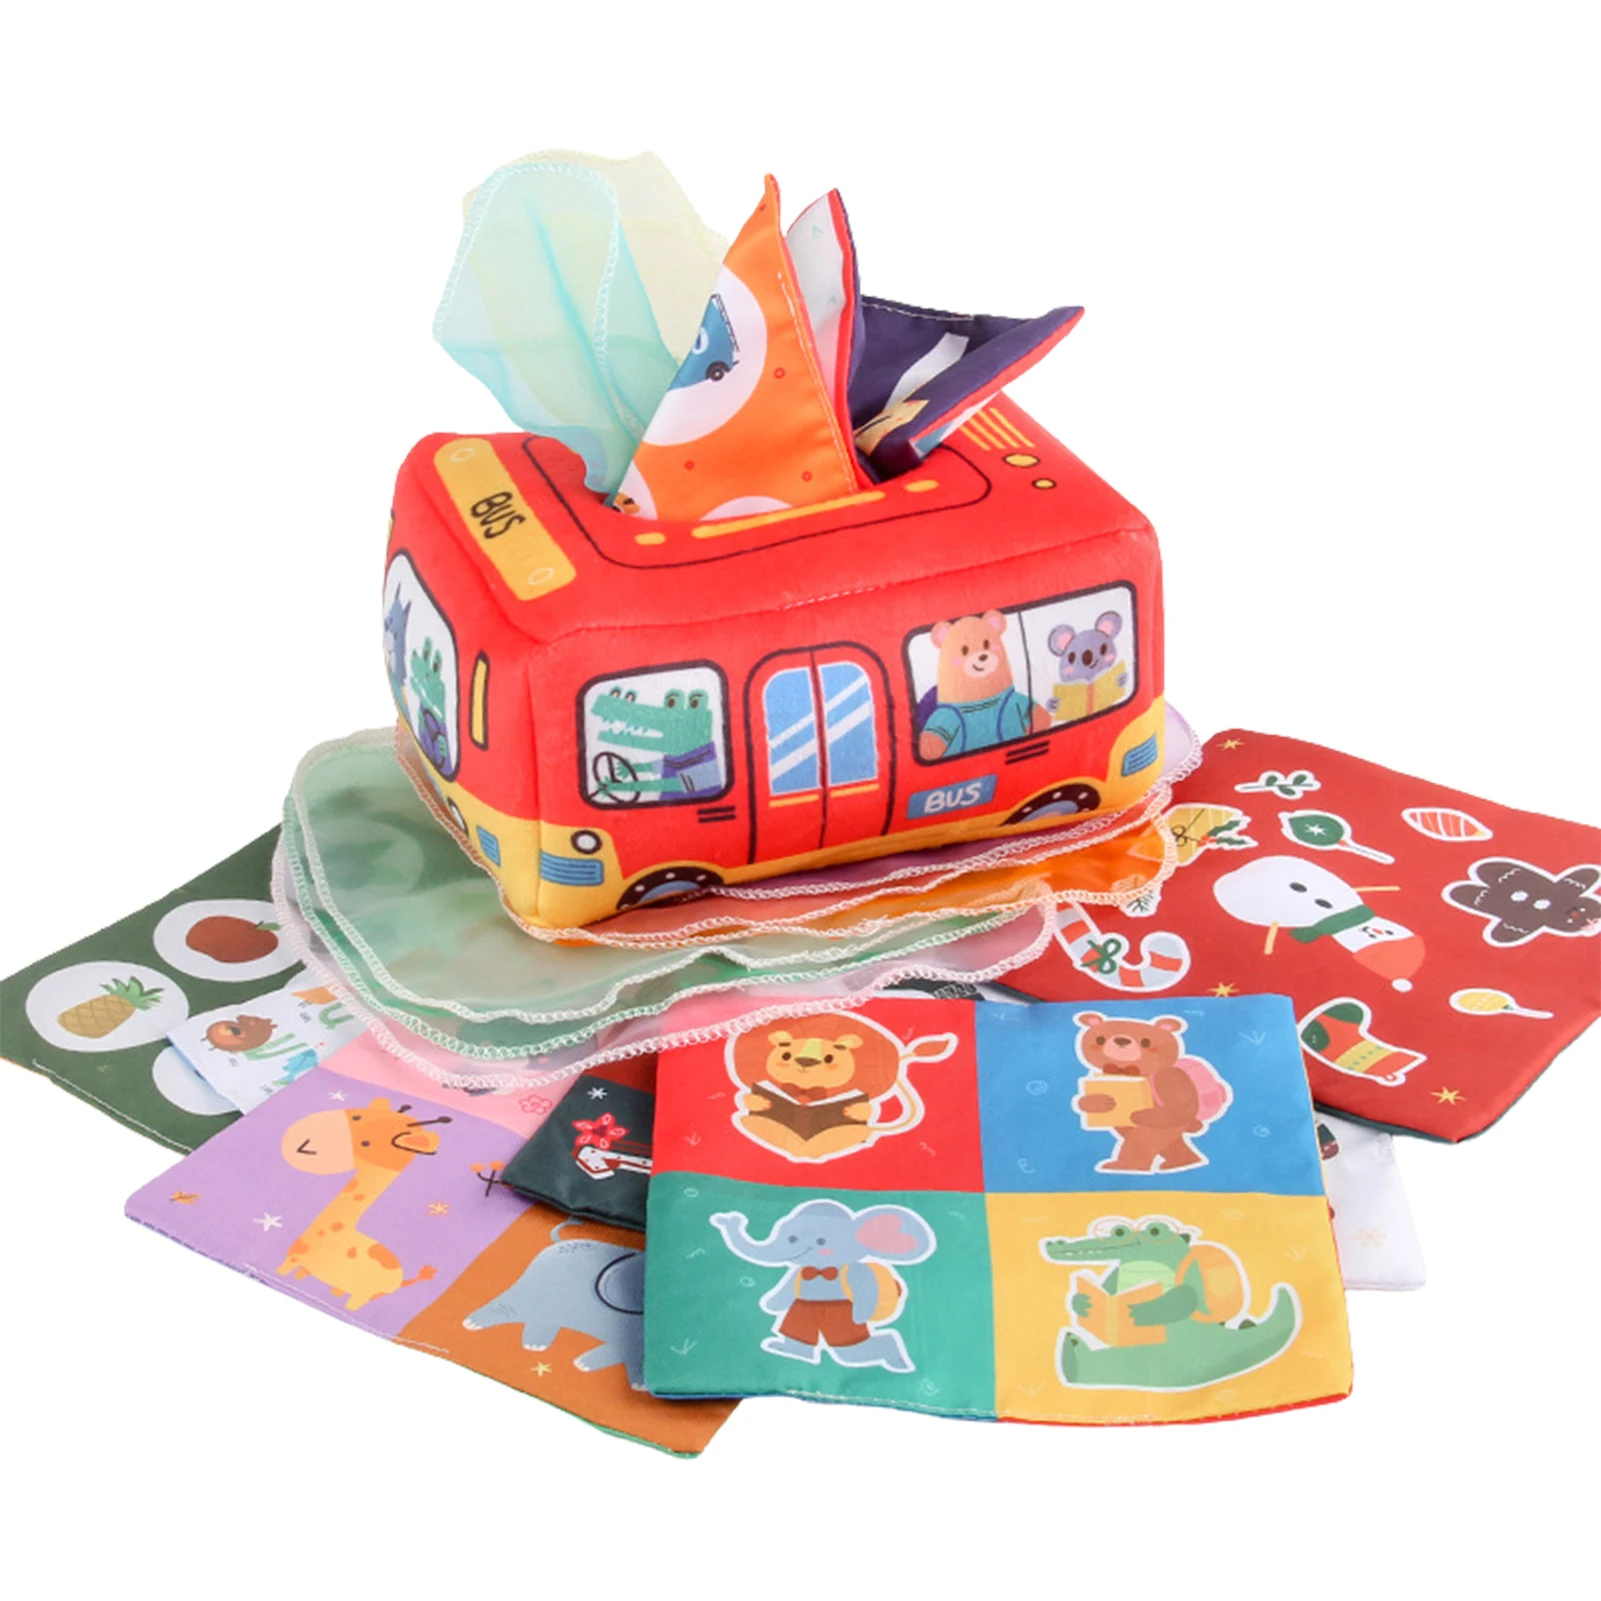 

Baby Tissue Box Toy Baby STEM Montessori Educational Preschool Learning Toys Sensory Bin Filler For Newborn Baby